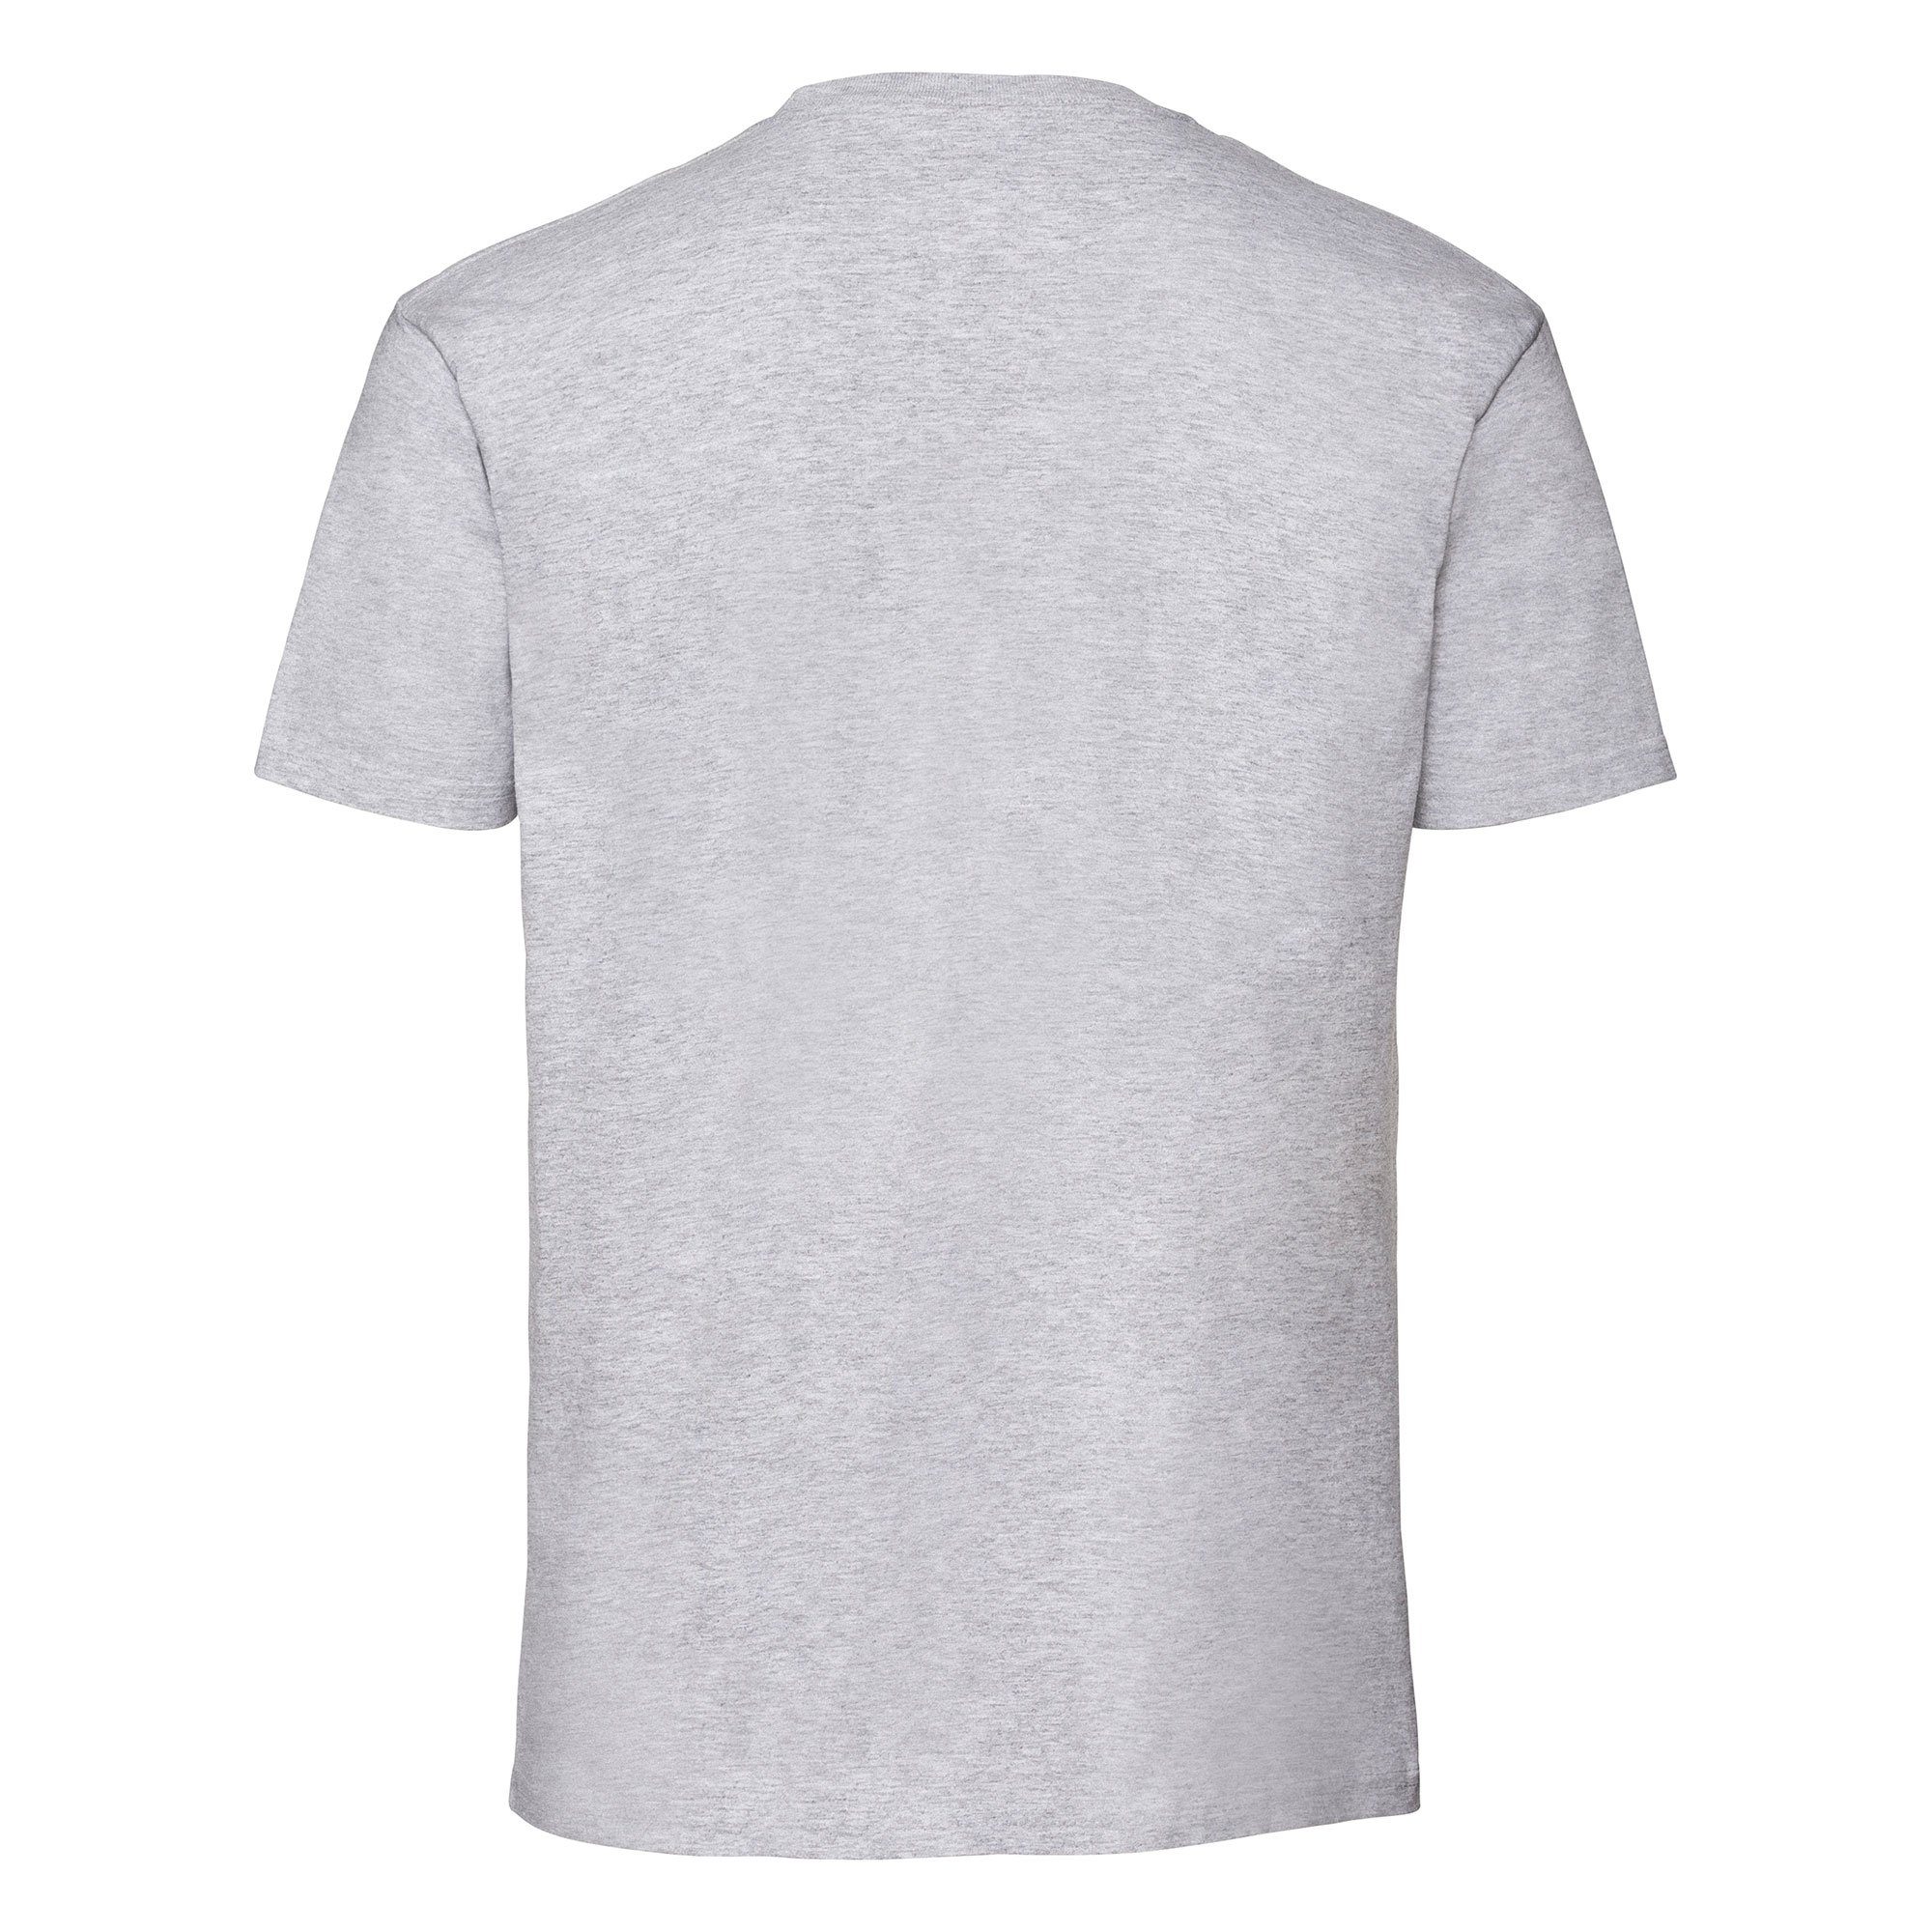 Loom T-Shirt Premium Ringspun the - klein Fruit Rundhalsshirt Vintage-Logo of graumeliert